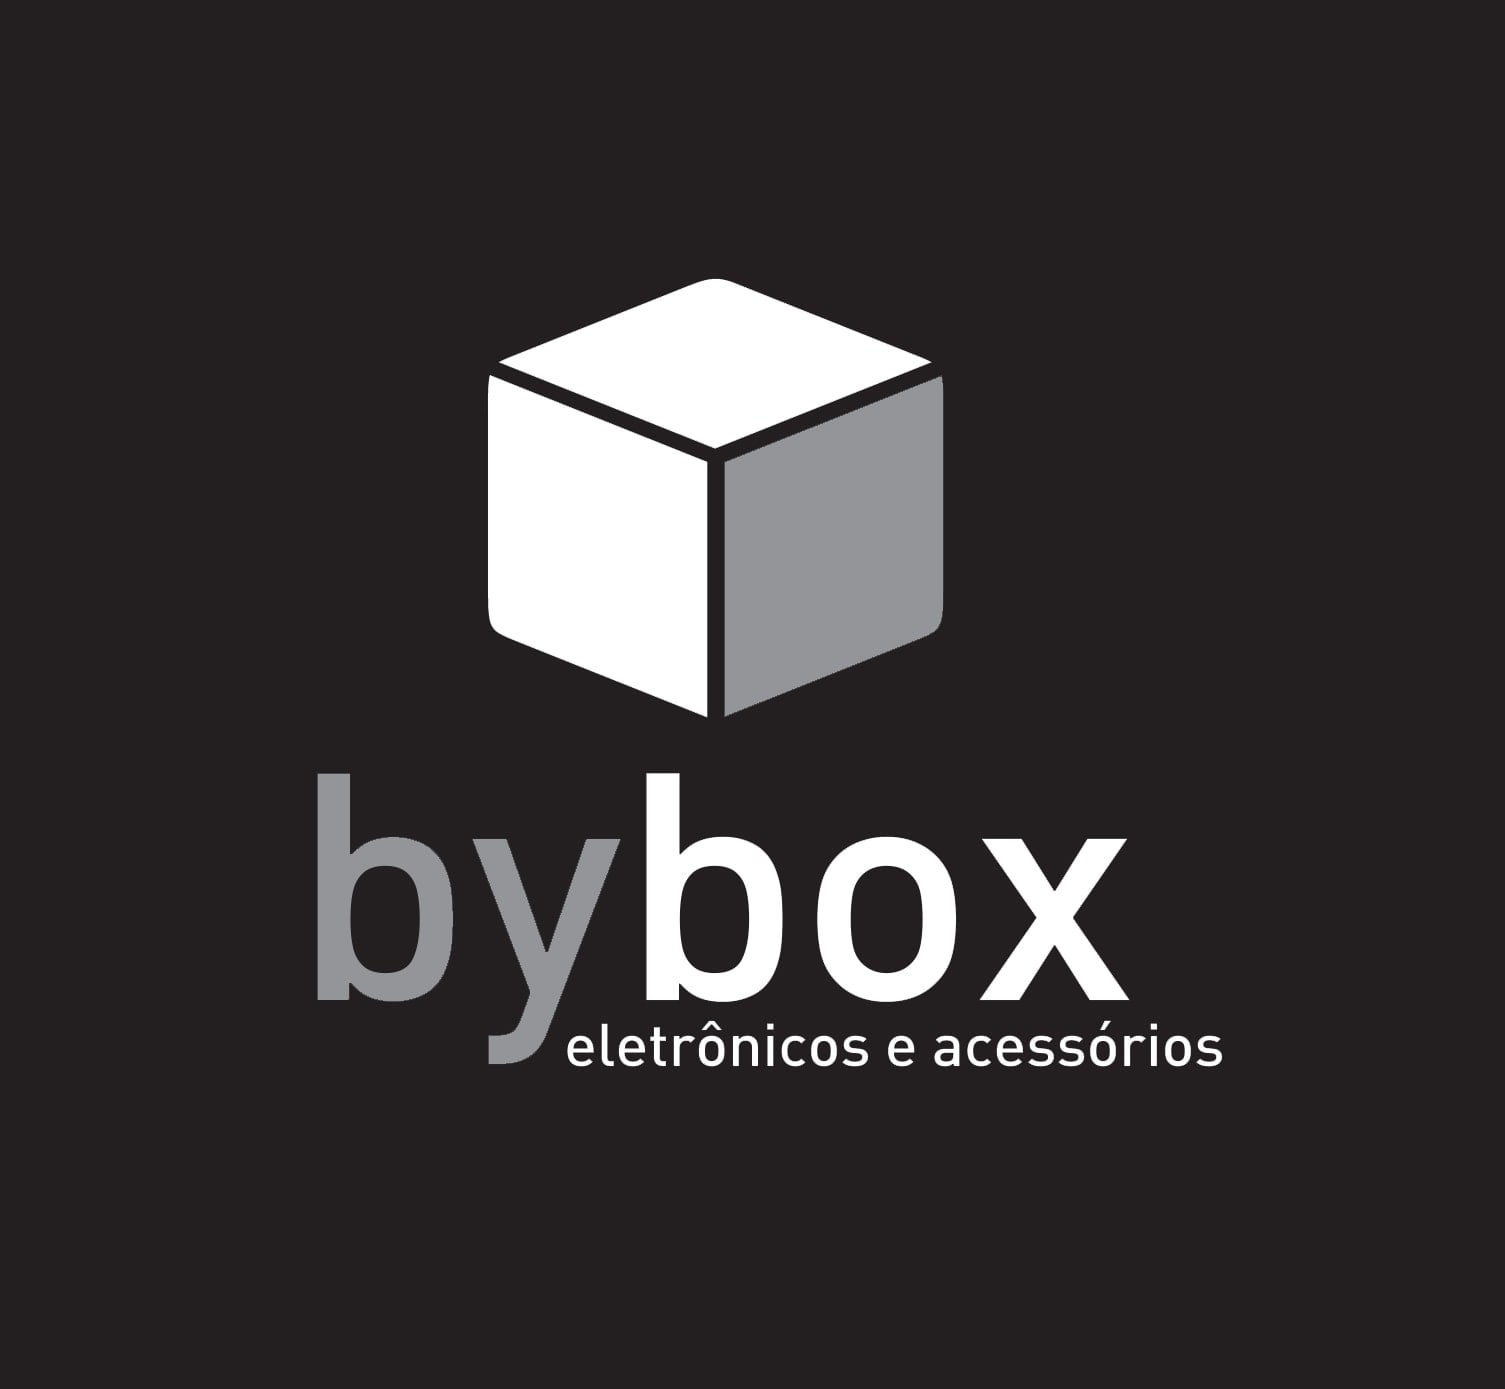 Bybox